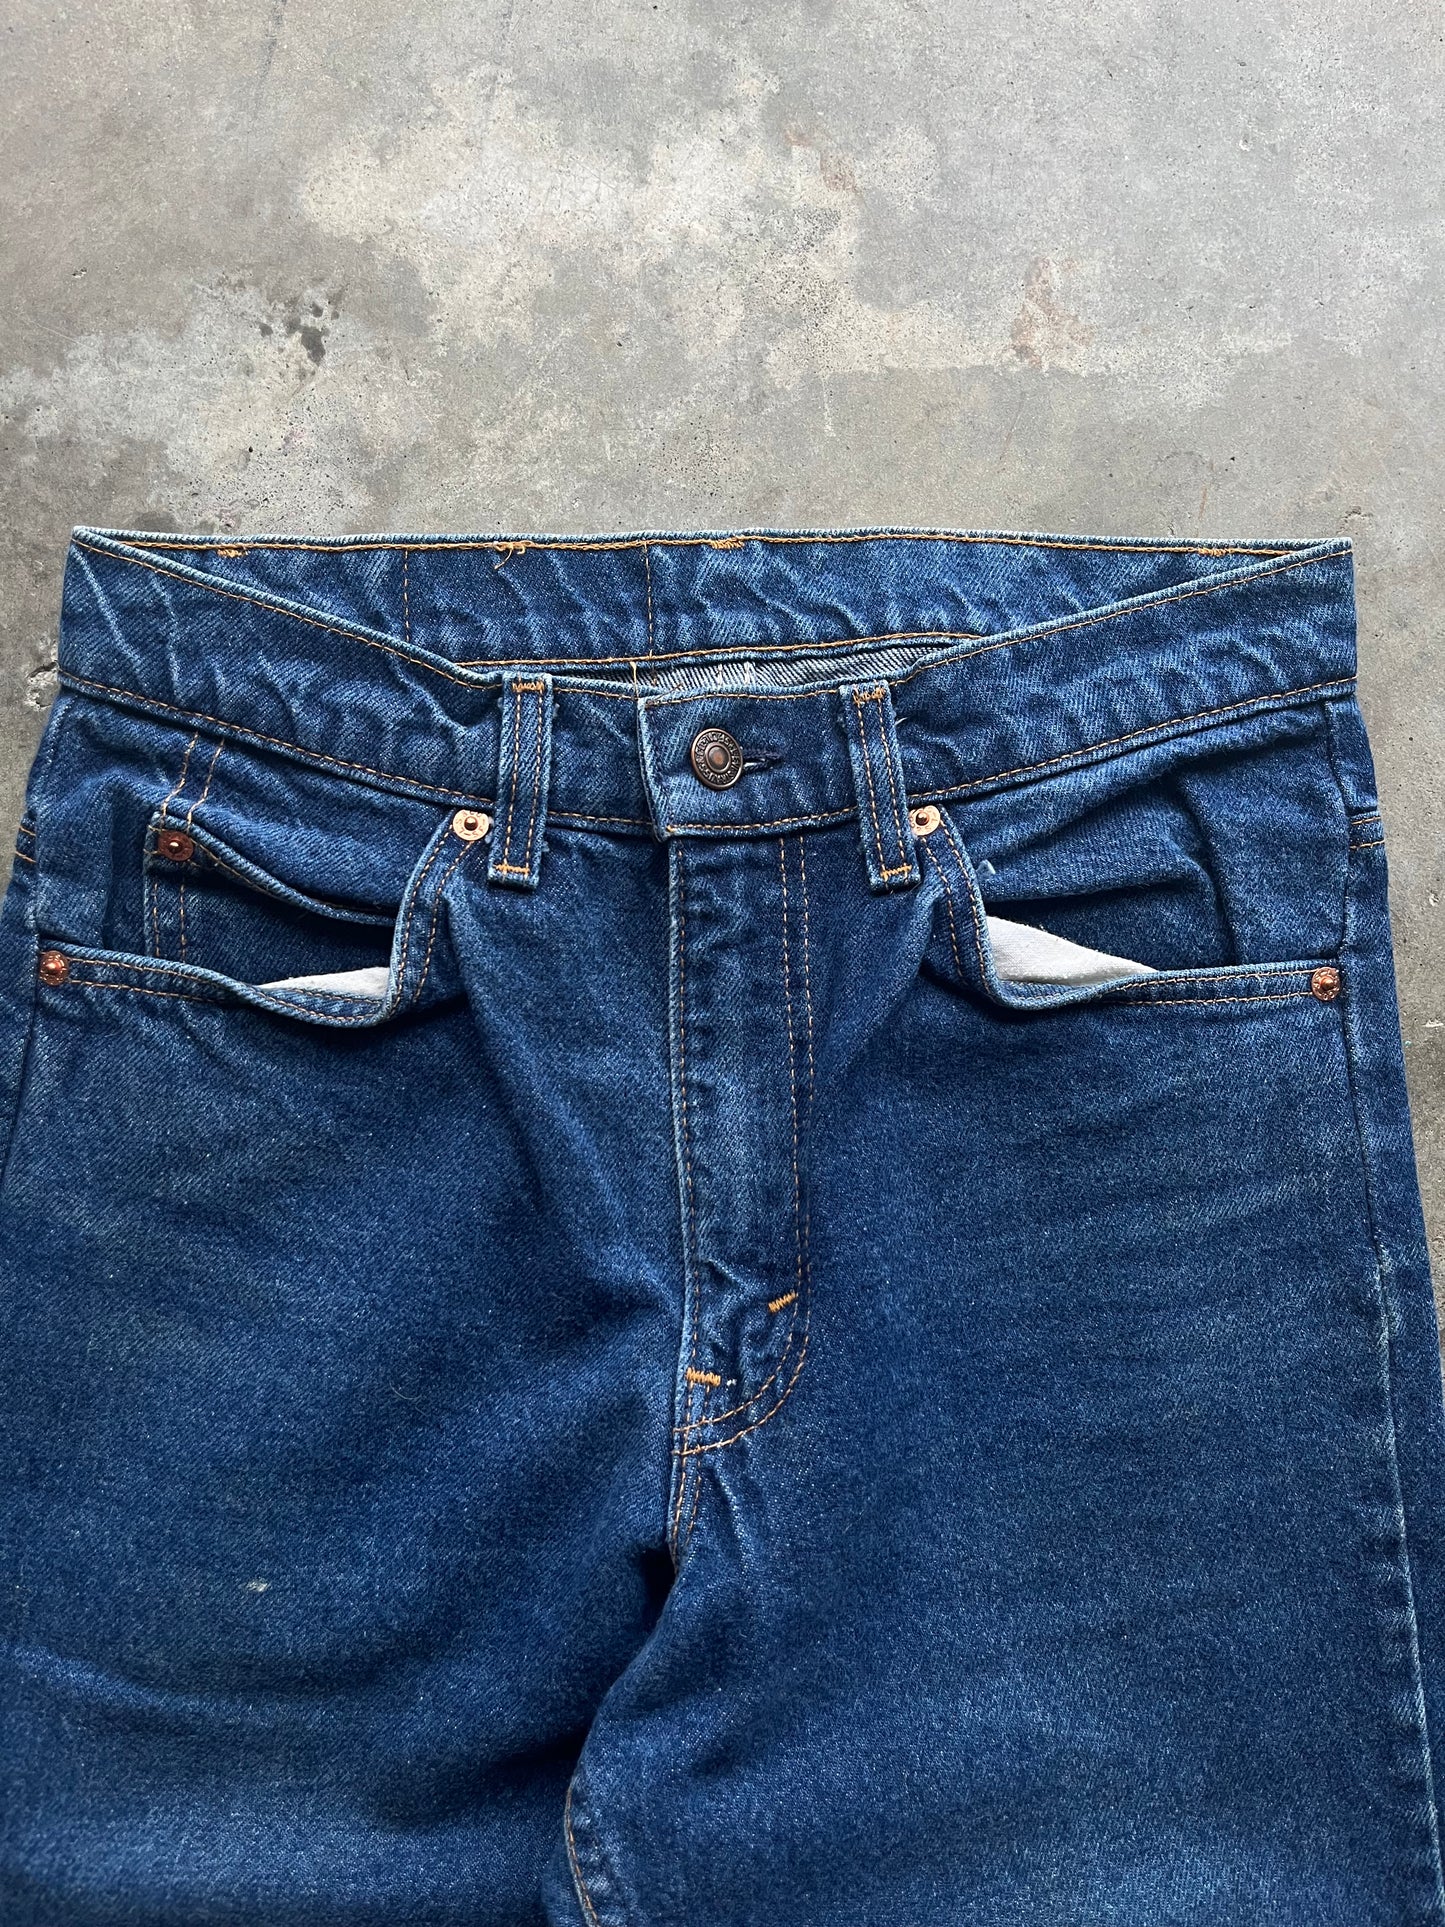 (29 x 32) Levi 517 Orange Tab Denim Jeans